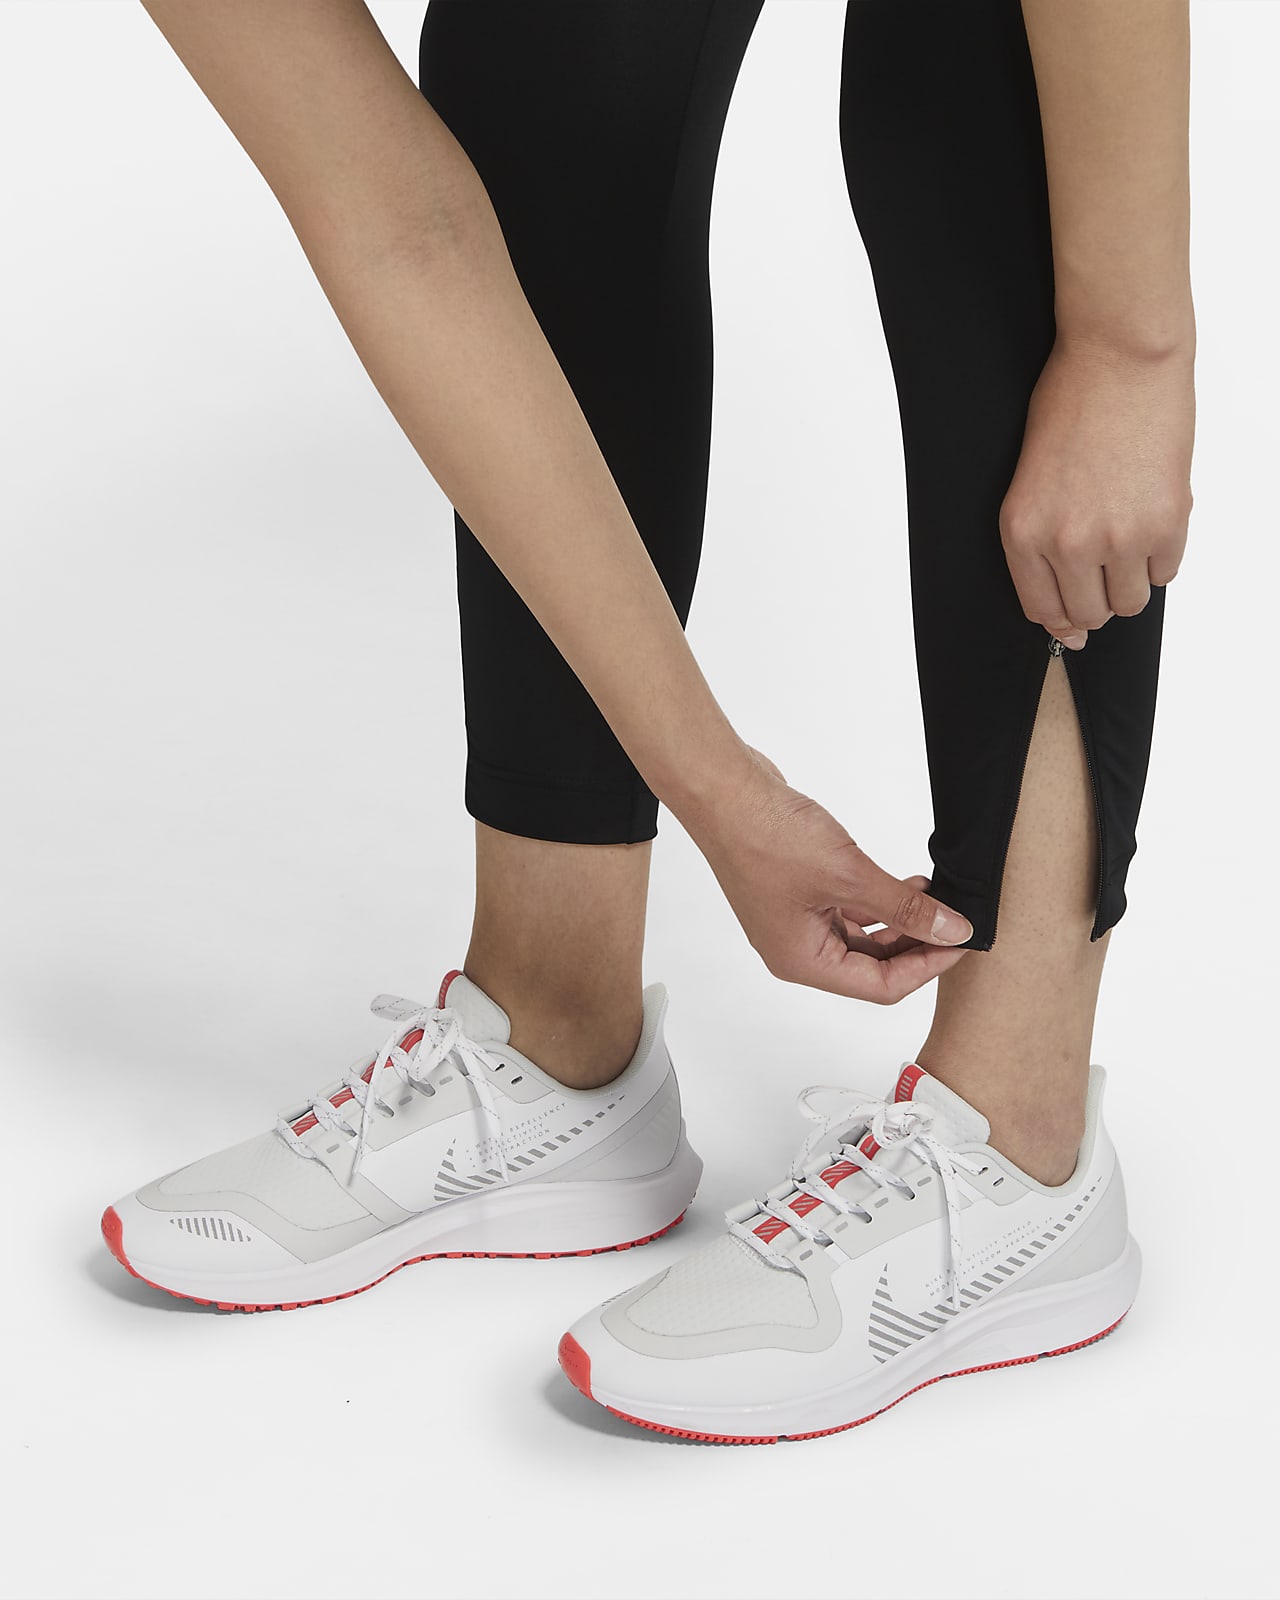 Nike Dri-FIT Essential Women's Running Trousers. Nike SG